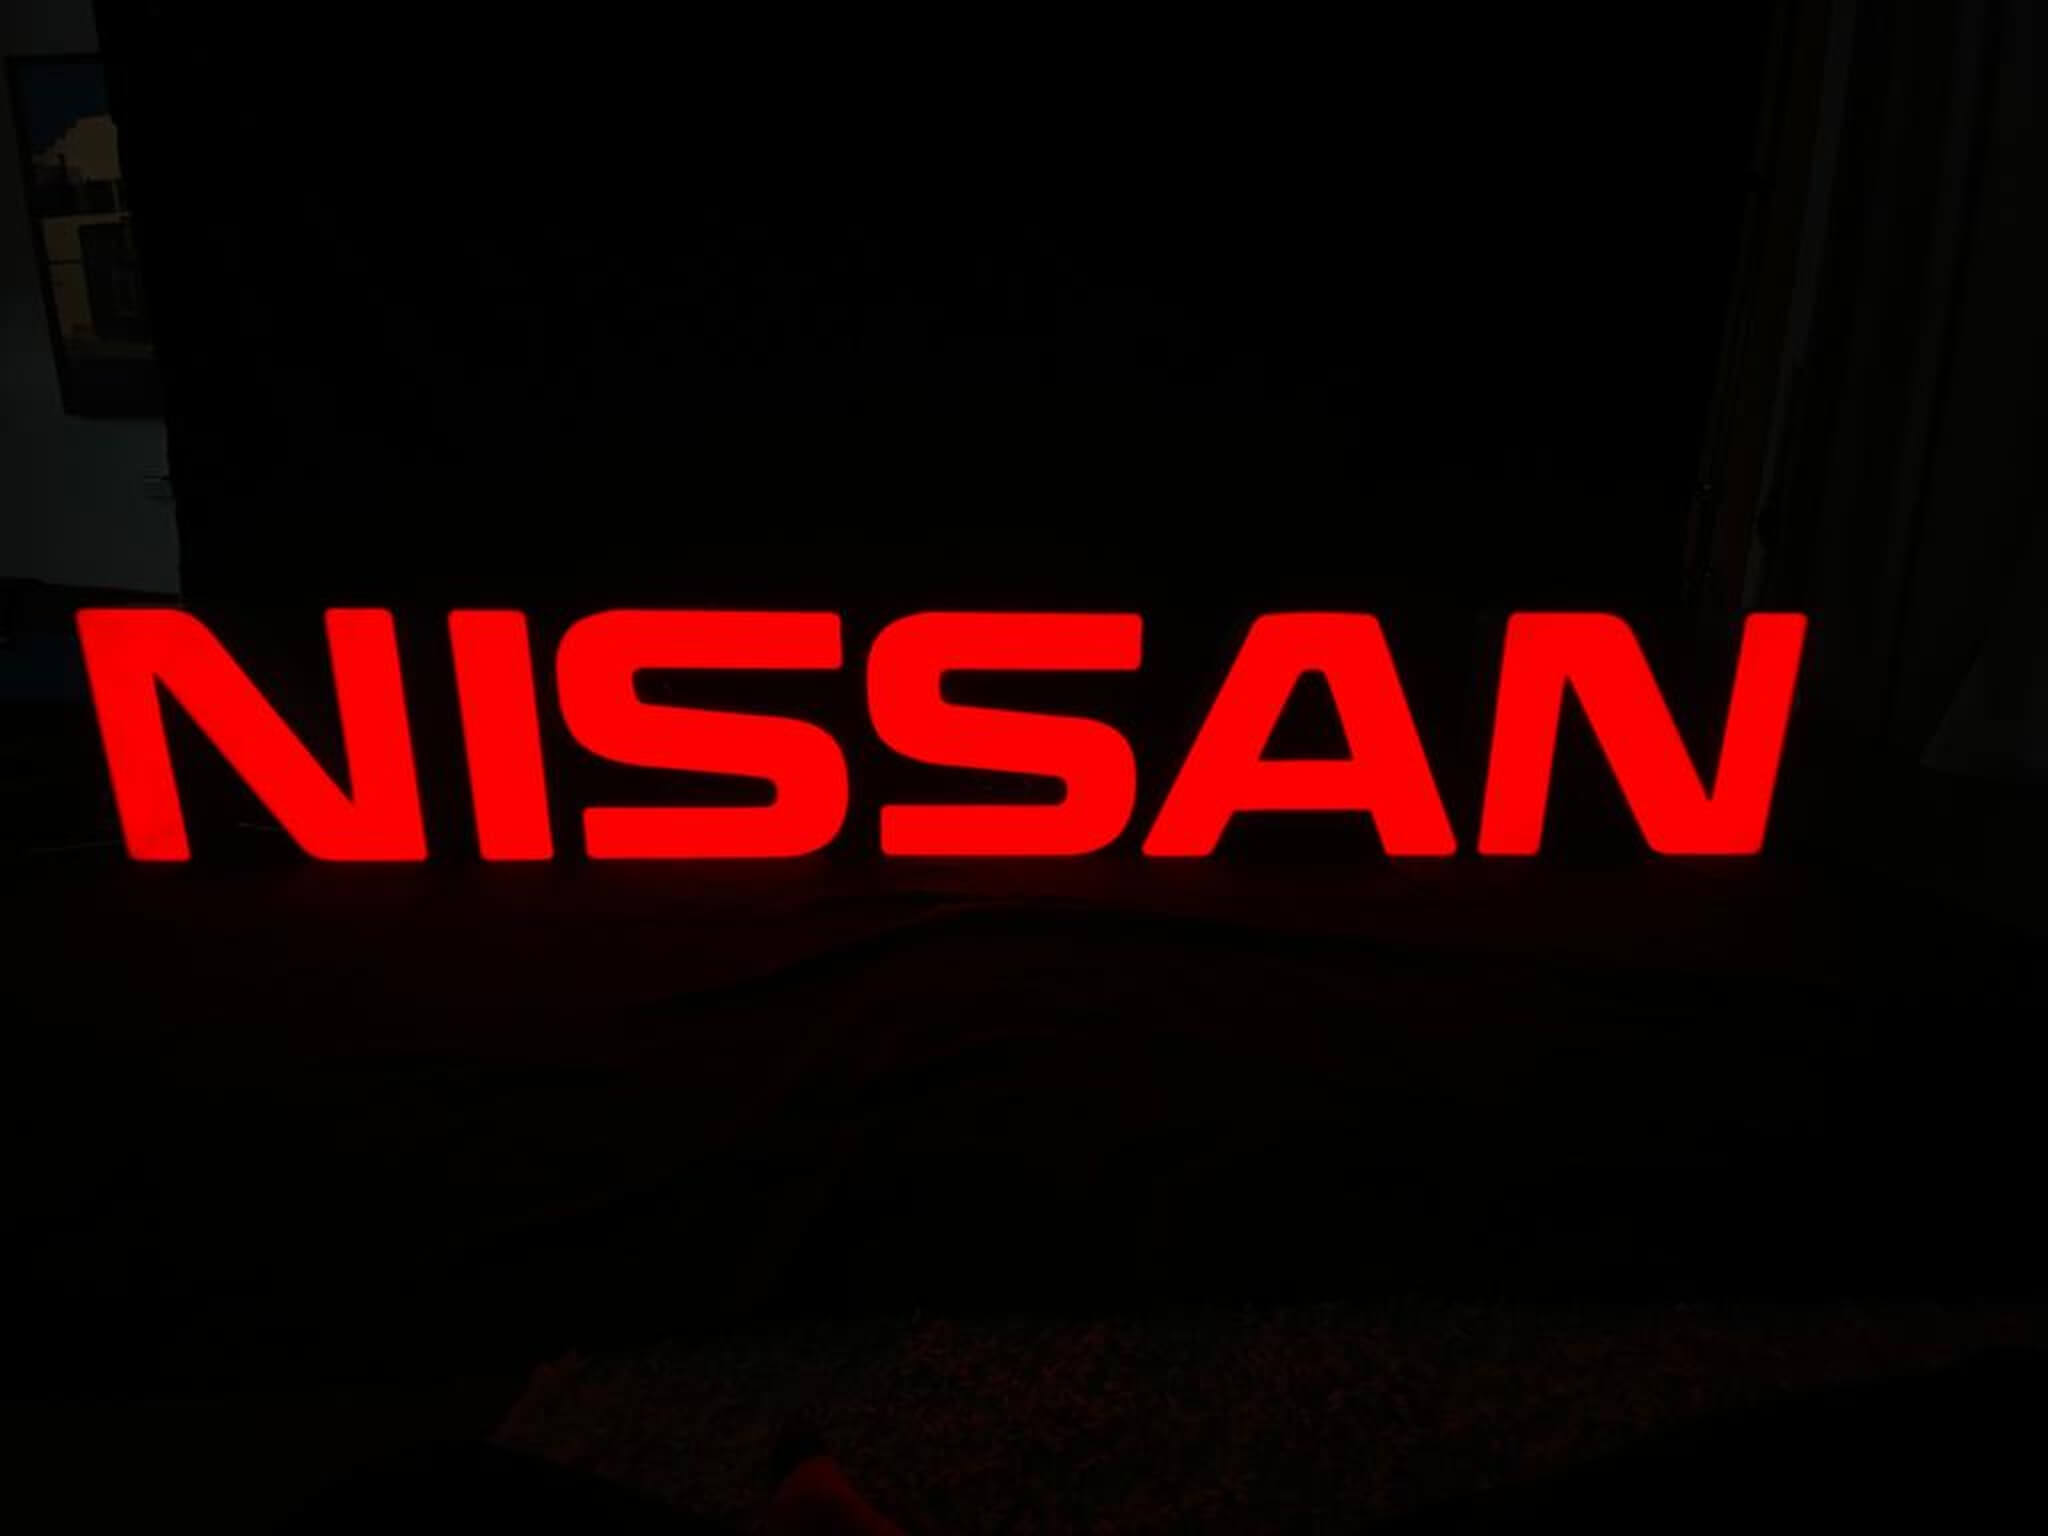 DT: Authentic Illuminated Nissan Dealership Letters